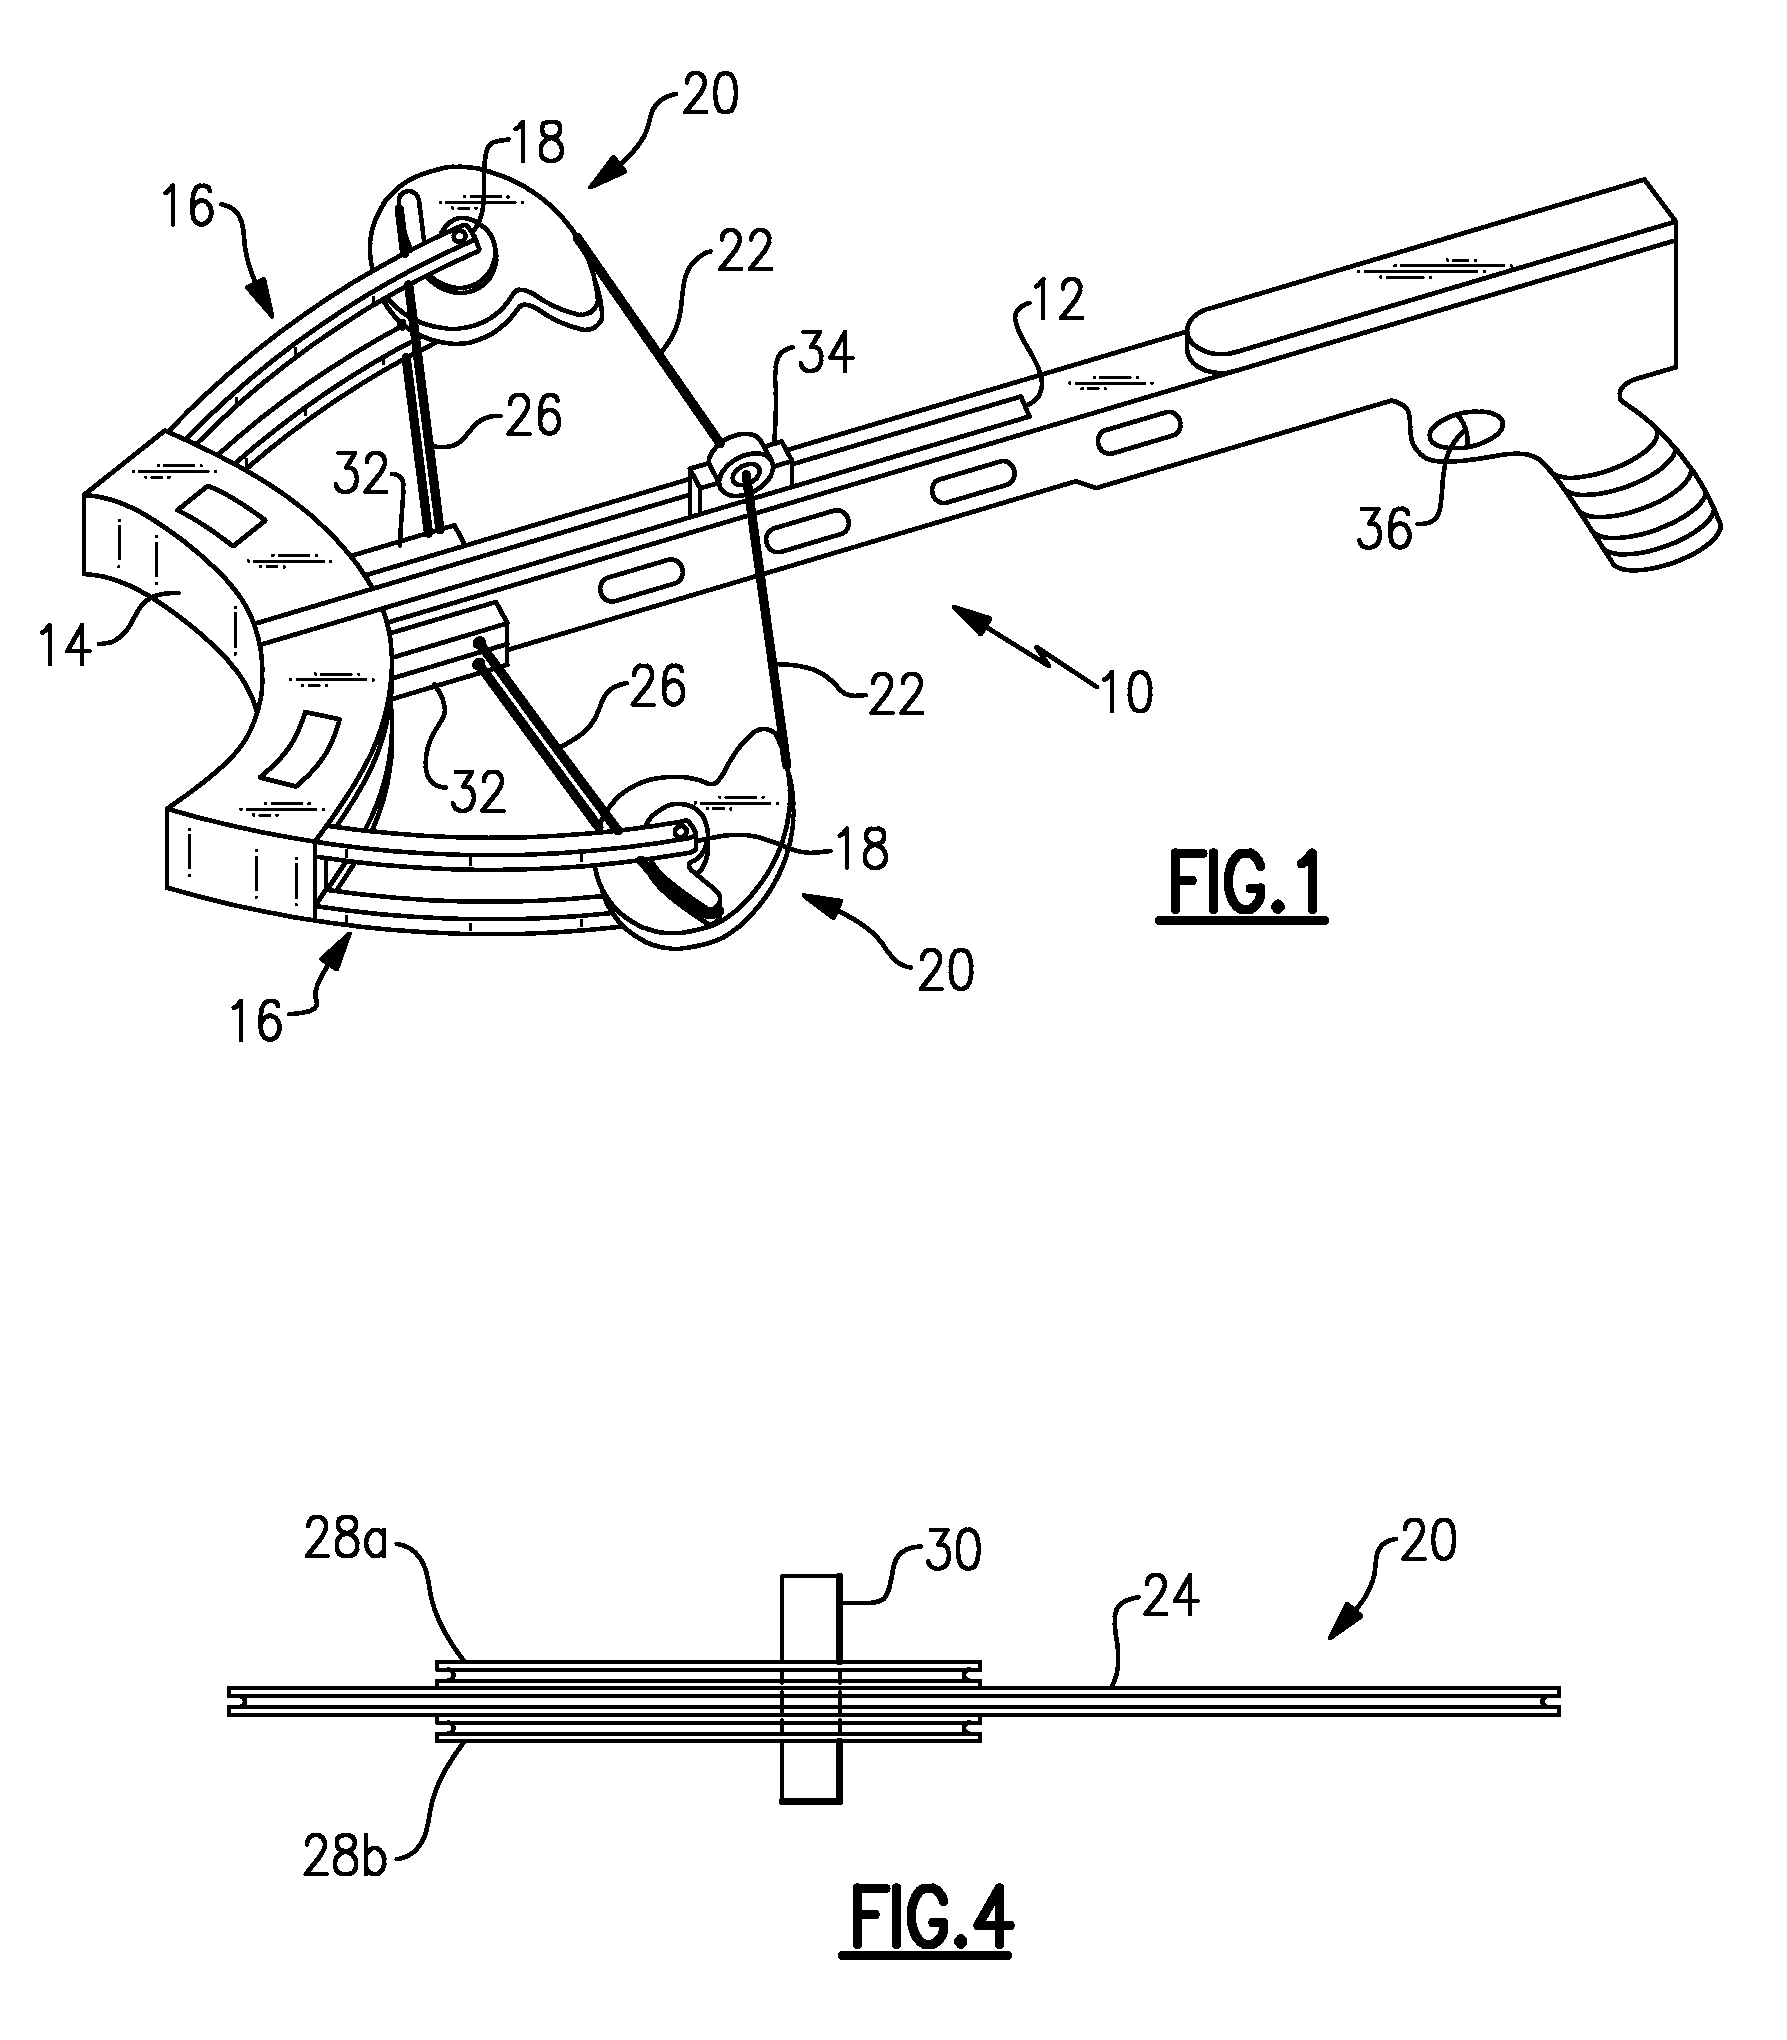 Bowstring cam arrangement for compound crossbow